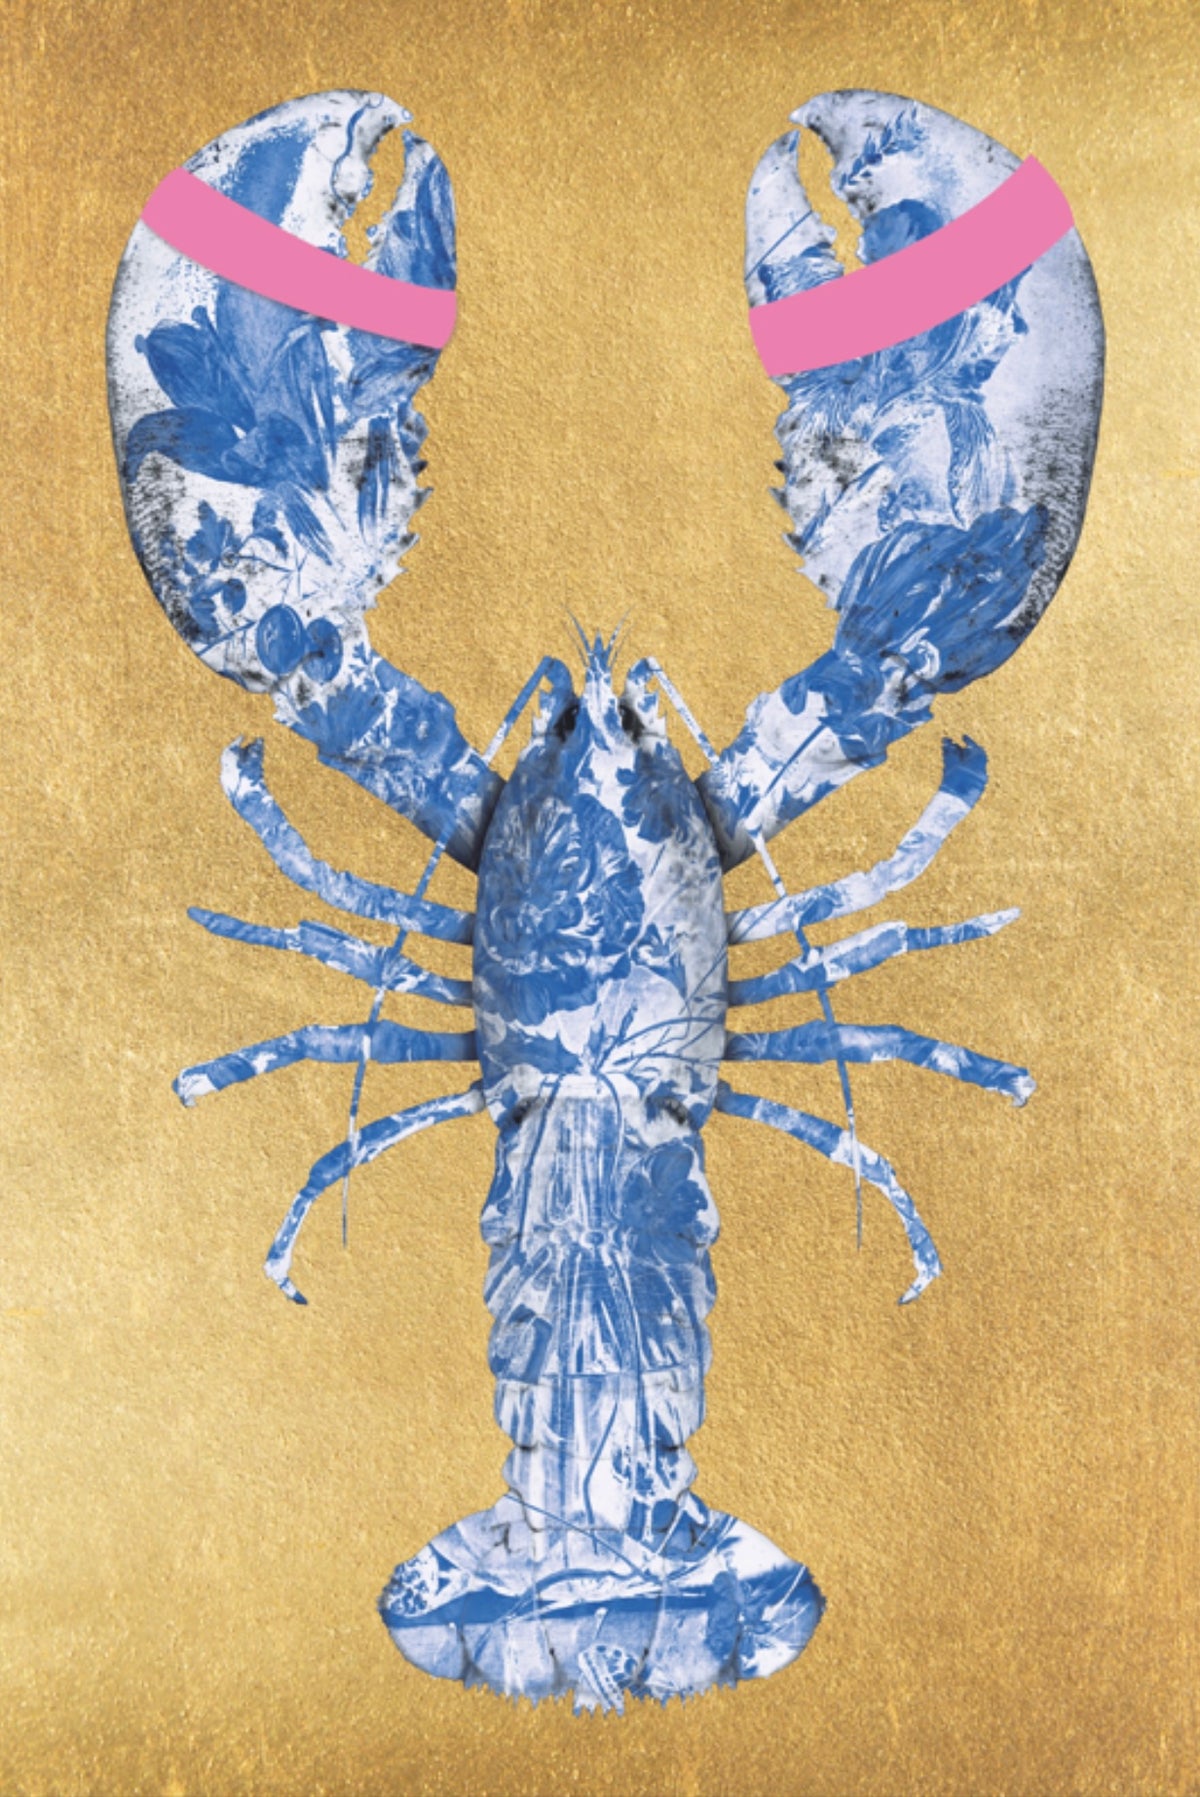 Lobster Royal Blue Pink verticaal - Plexiglas schilderij